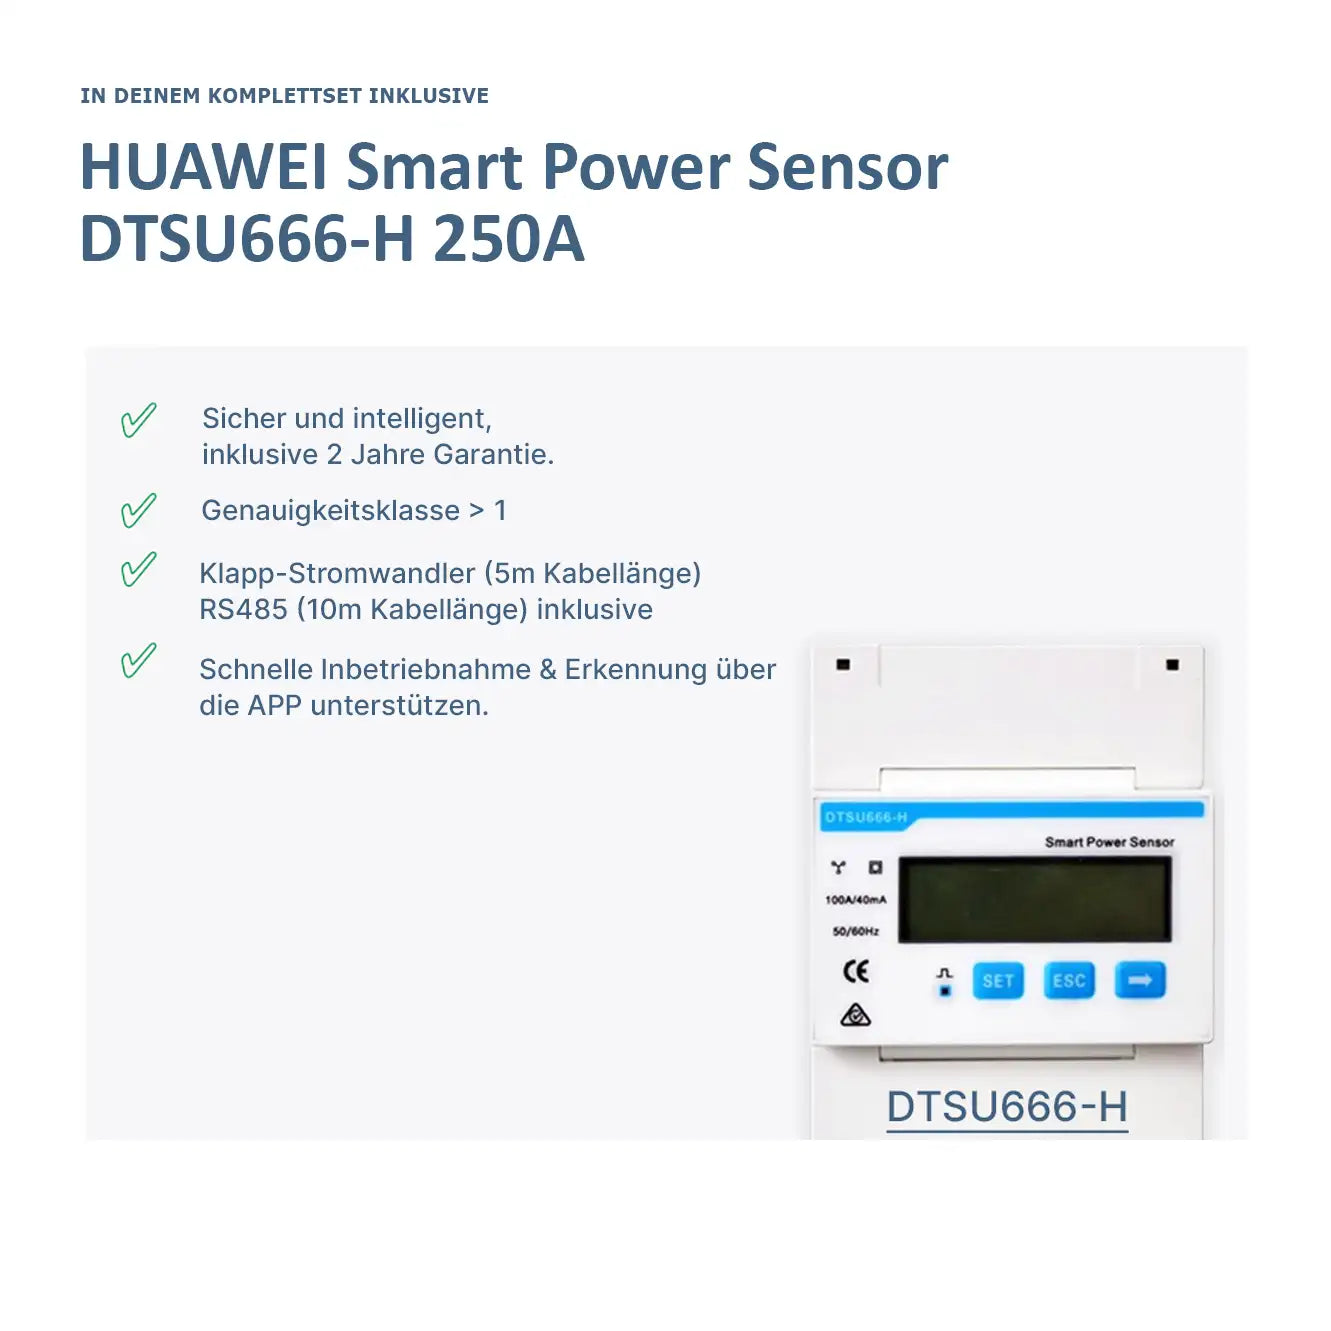 Huawei Wechselrichter 10KW LUNA2000 5 s0 Set